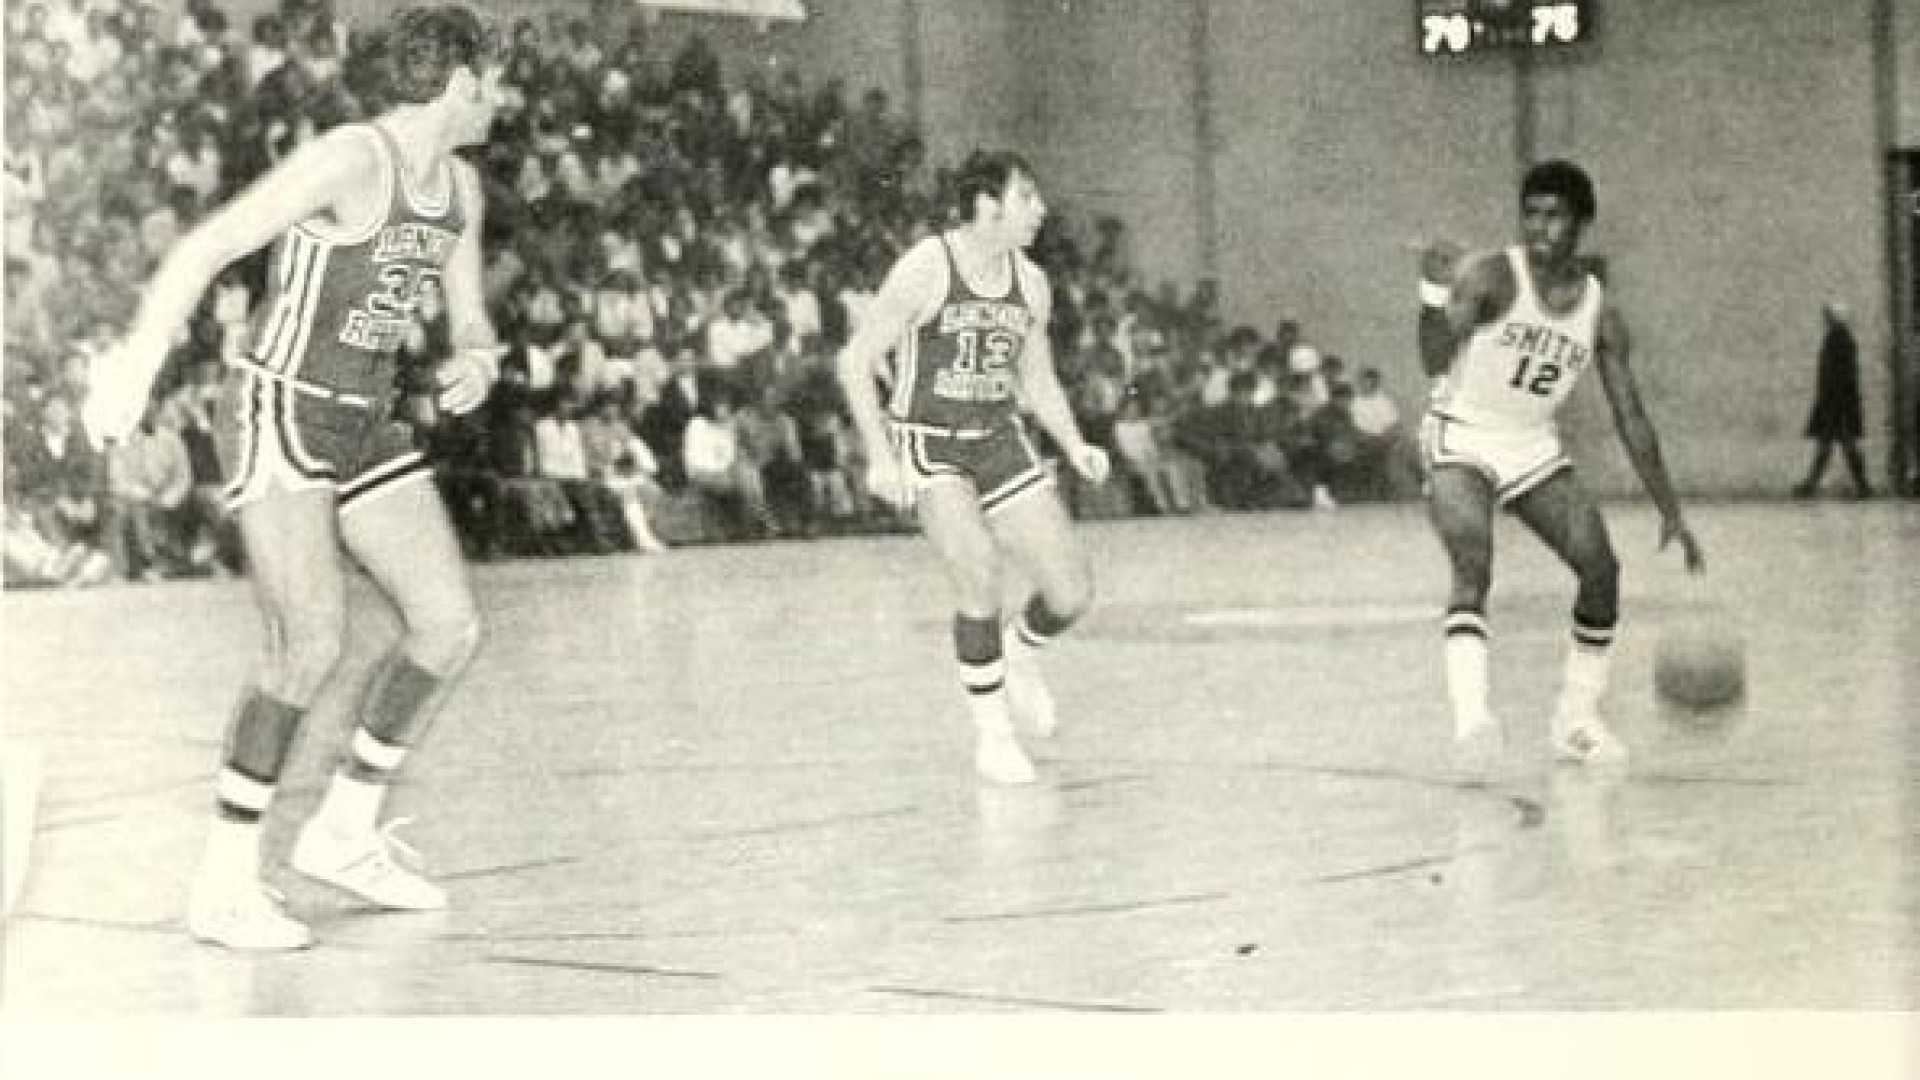 Yearbook photo of Steve Joyner playing Basketball in Brayboy Gym